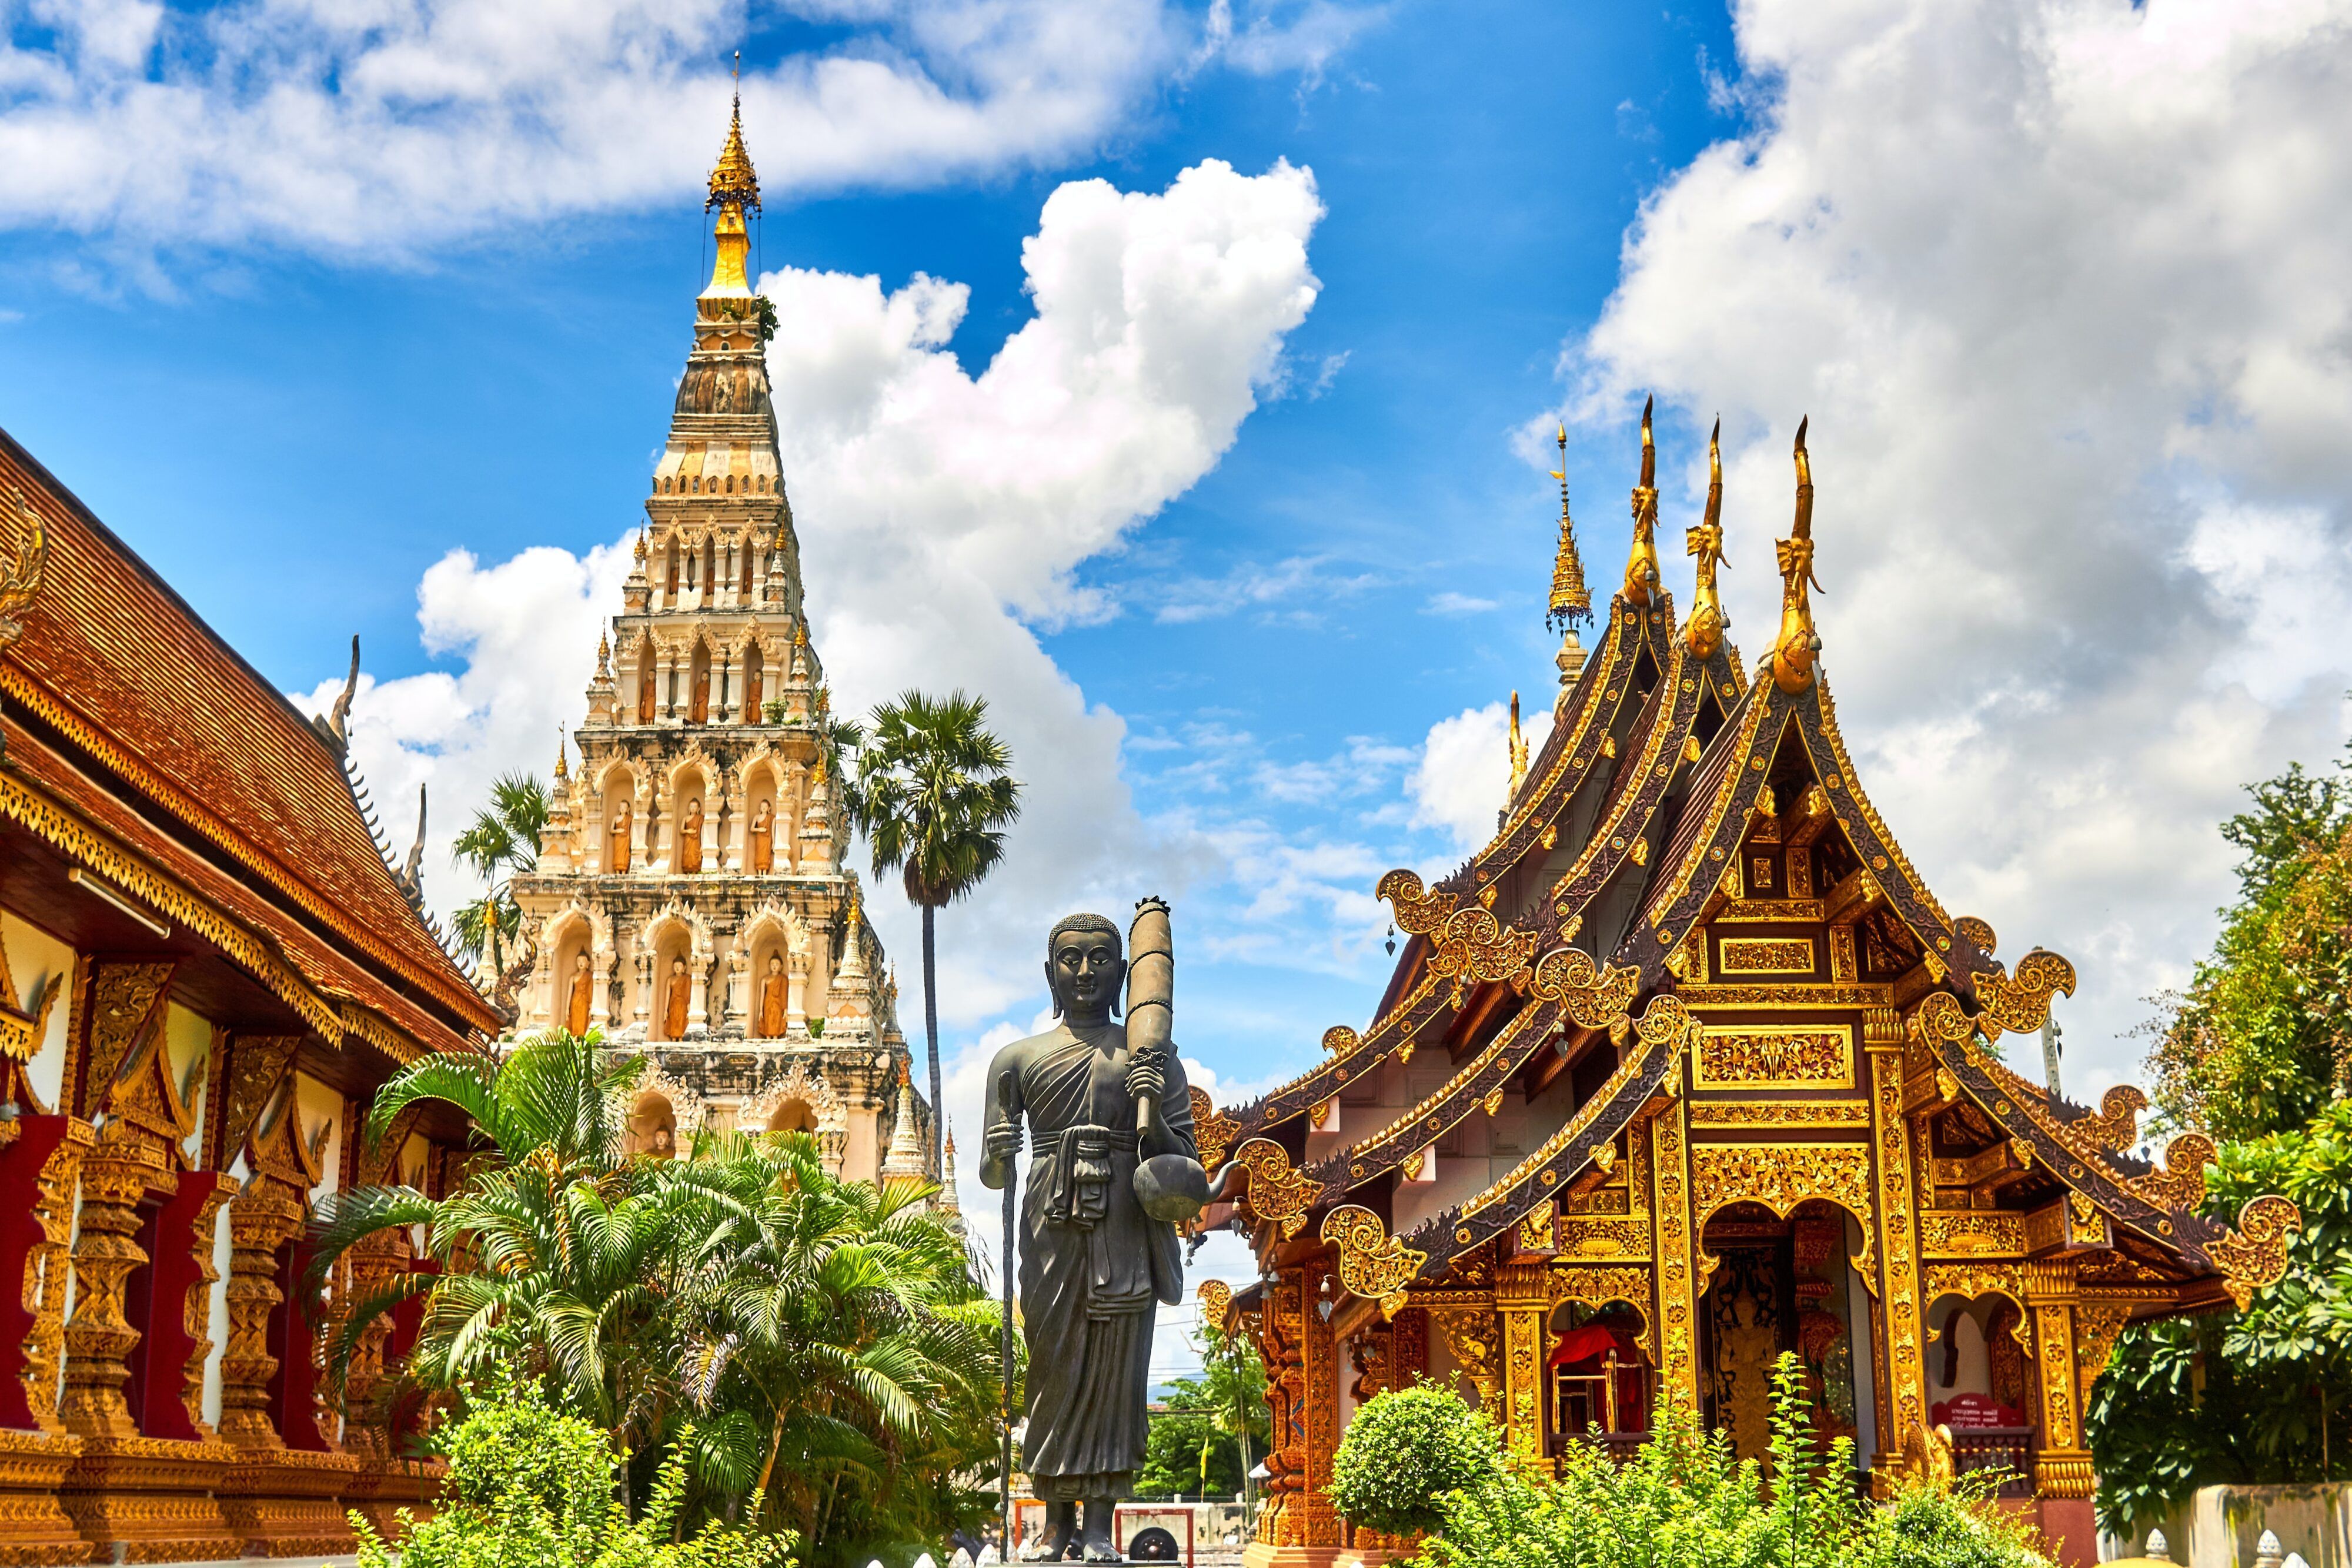 Перепустка Thailand Pass для в'їзду в Таїланд більше не потрібна - 7 июля 2022 - Закордон